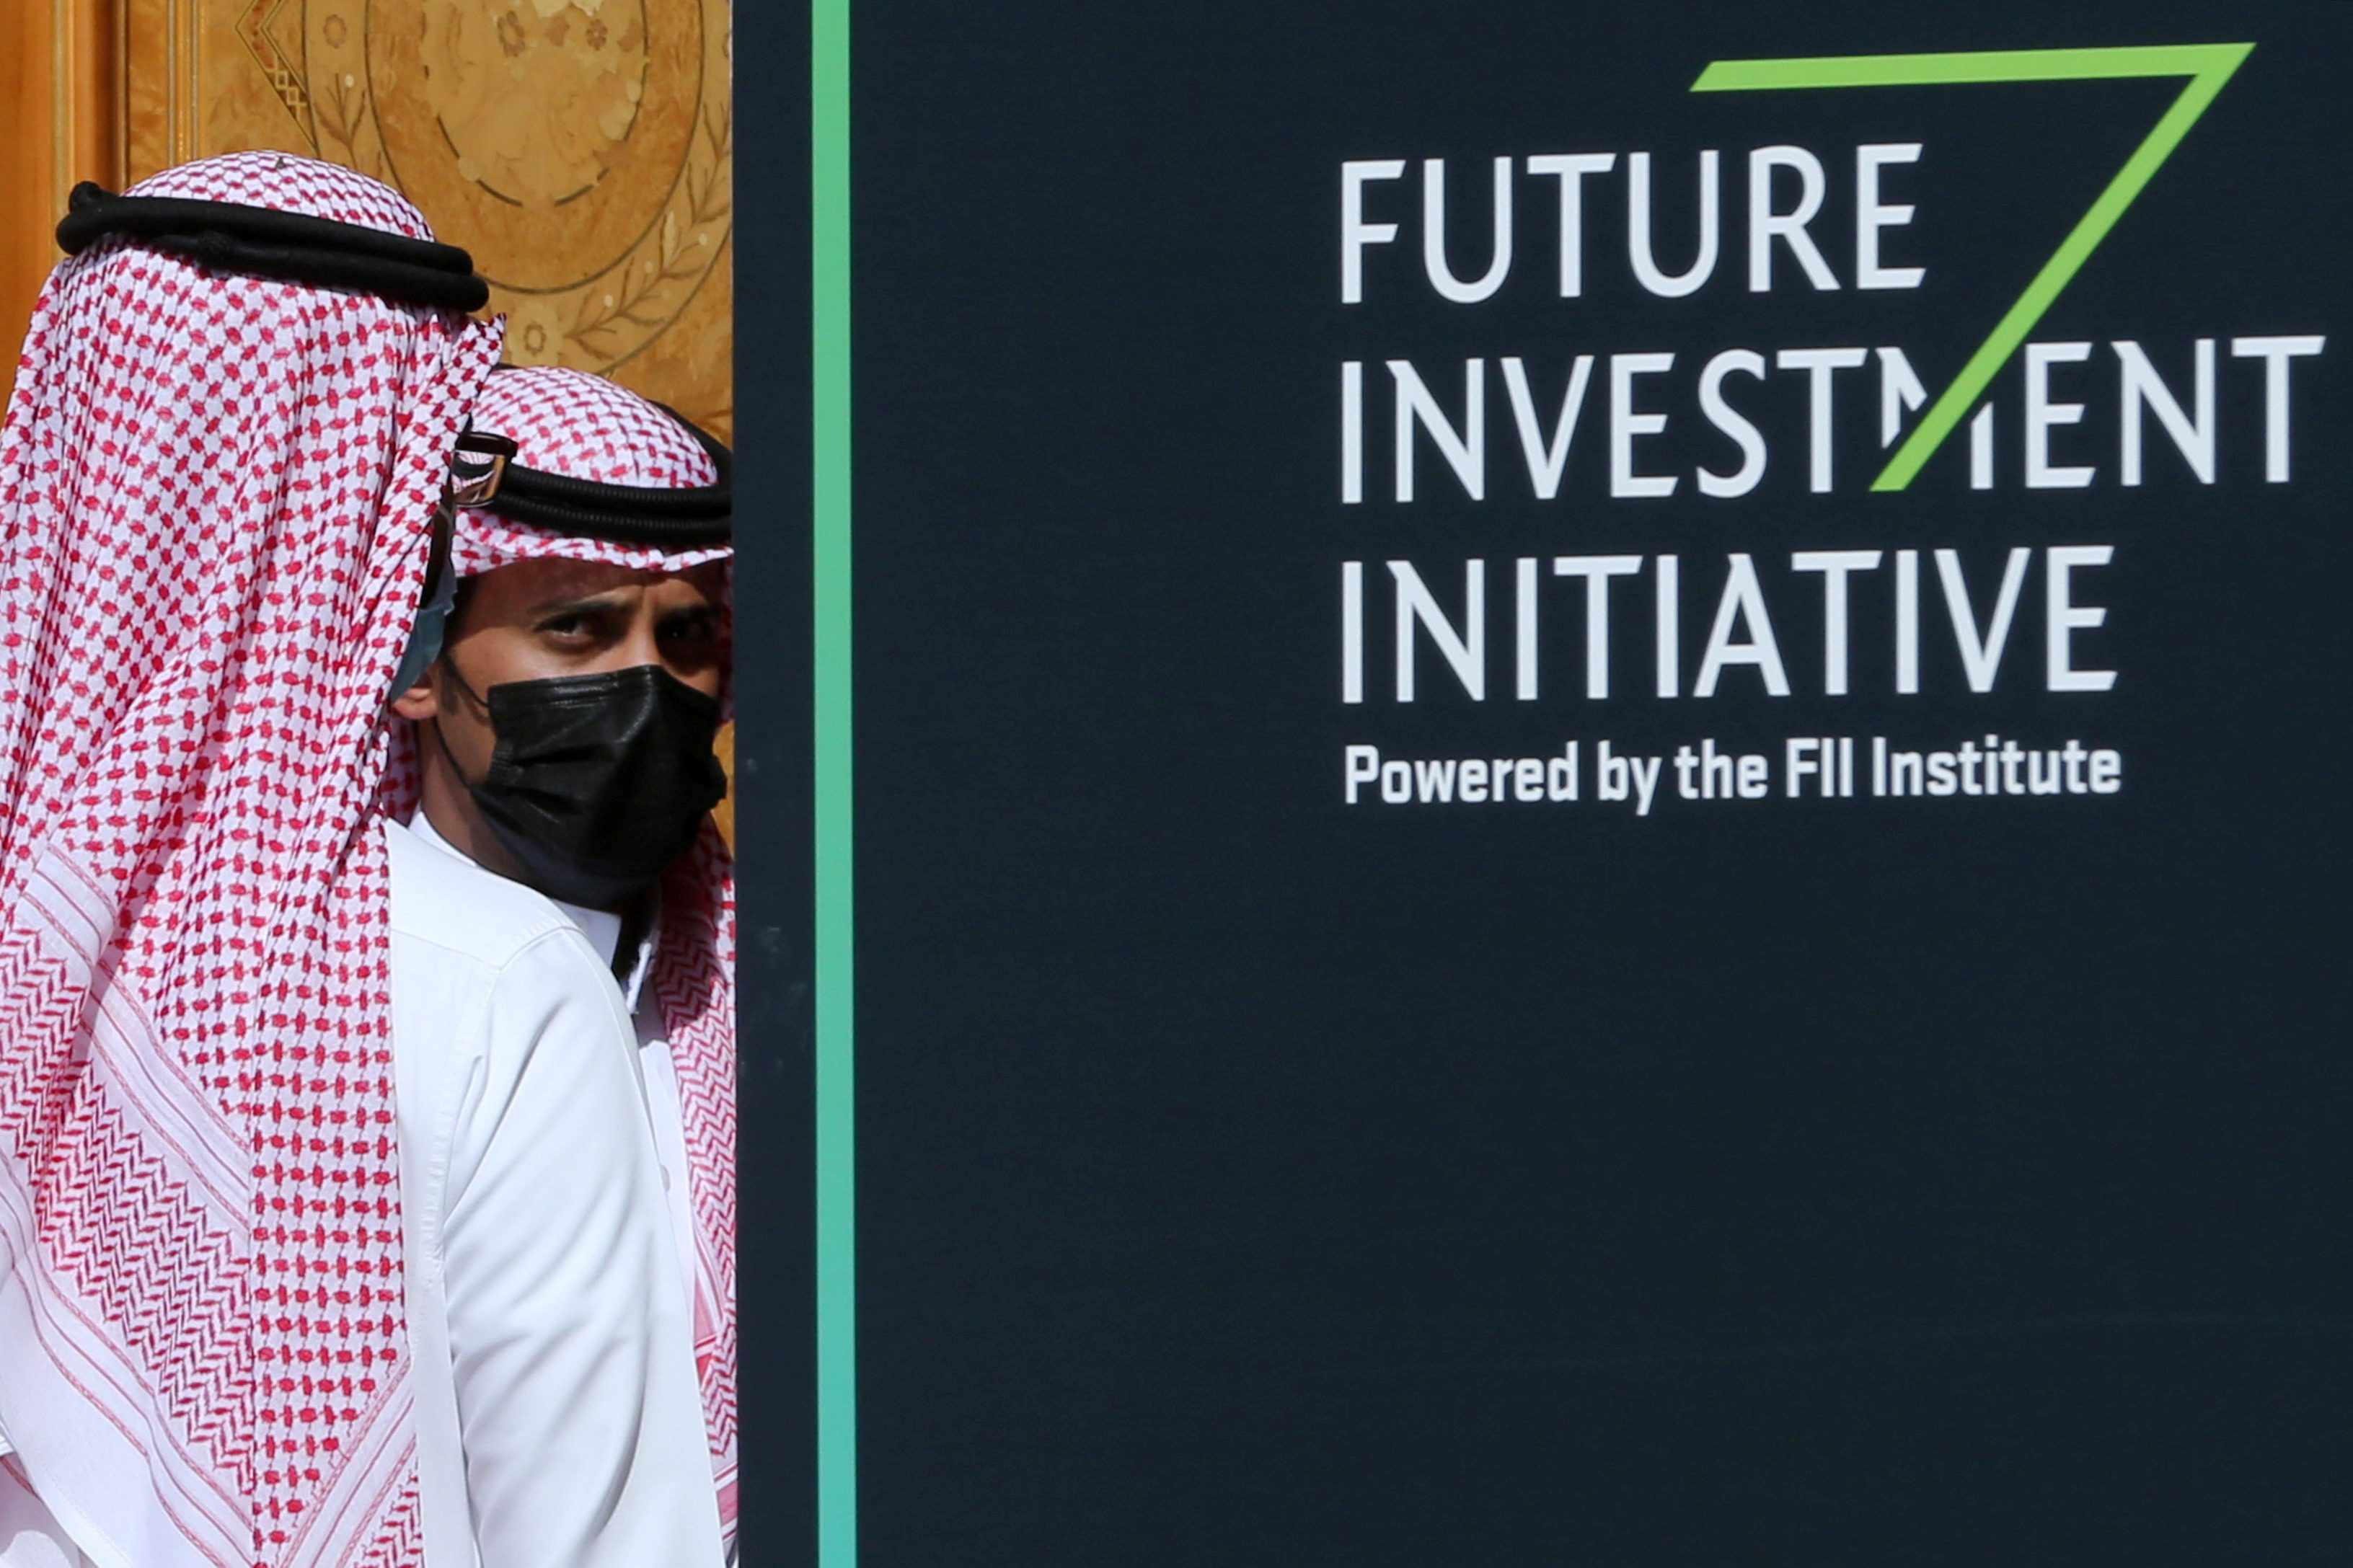 Saudi gov’t to invest $220 billion in Riyadh development over next 10 years